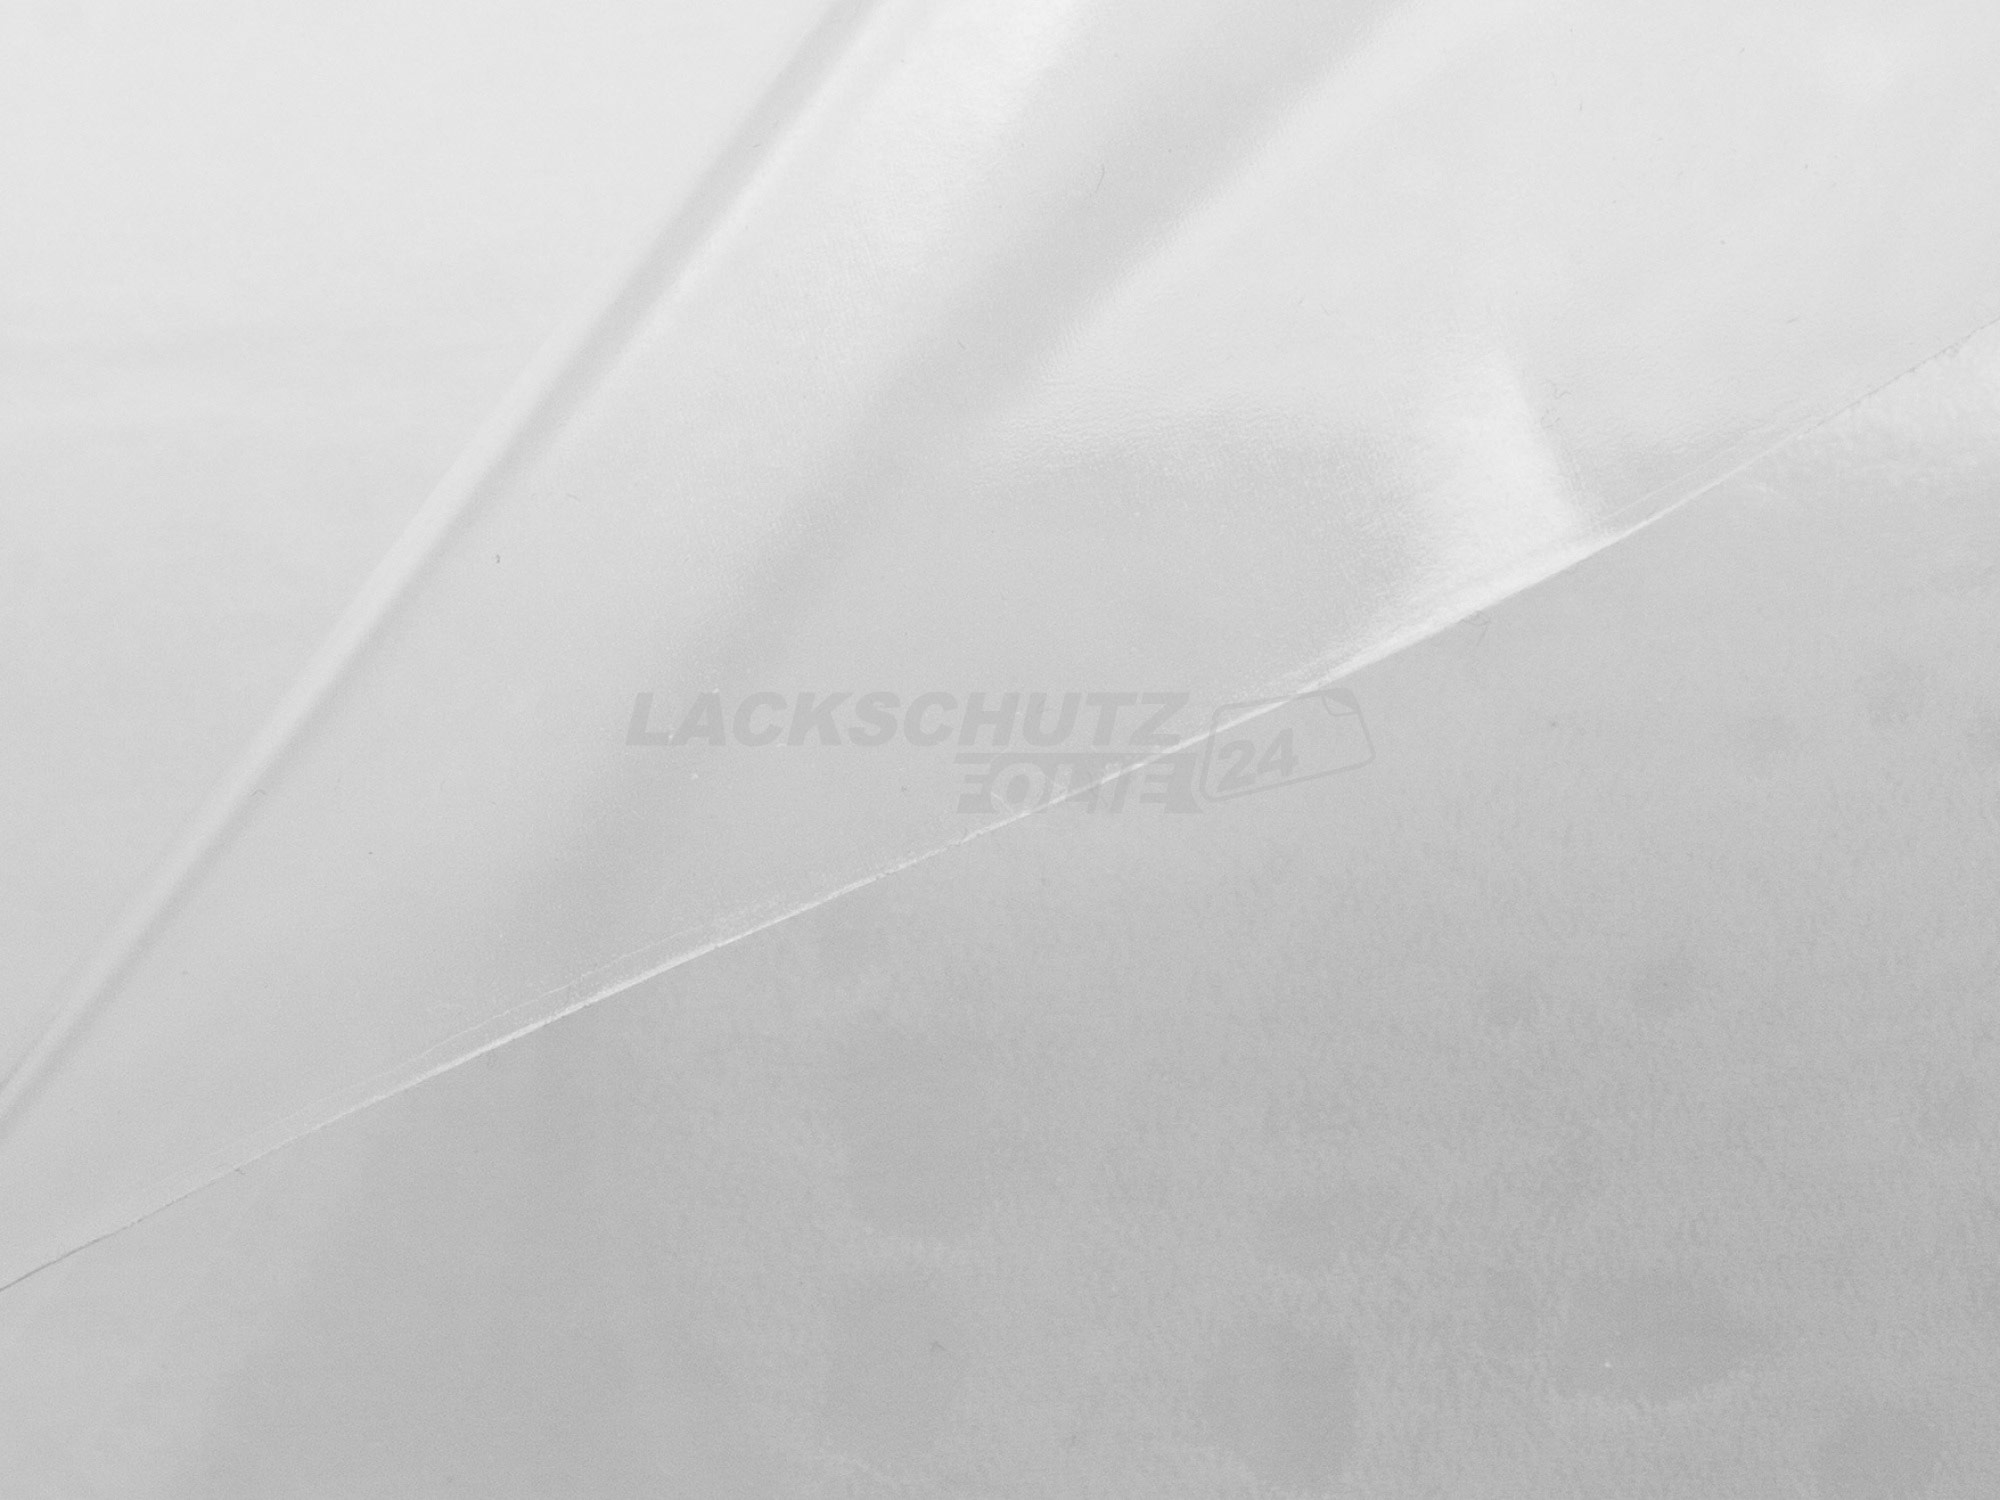 Ladekantenschutzfolie - Transparent Glatt Hochglänzend 150 µm stark für Audi Q3 Typ 8U, BJ 11/2011-08/2018